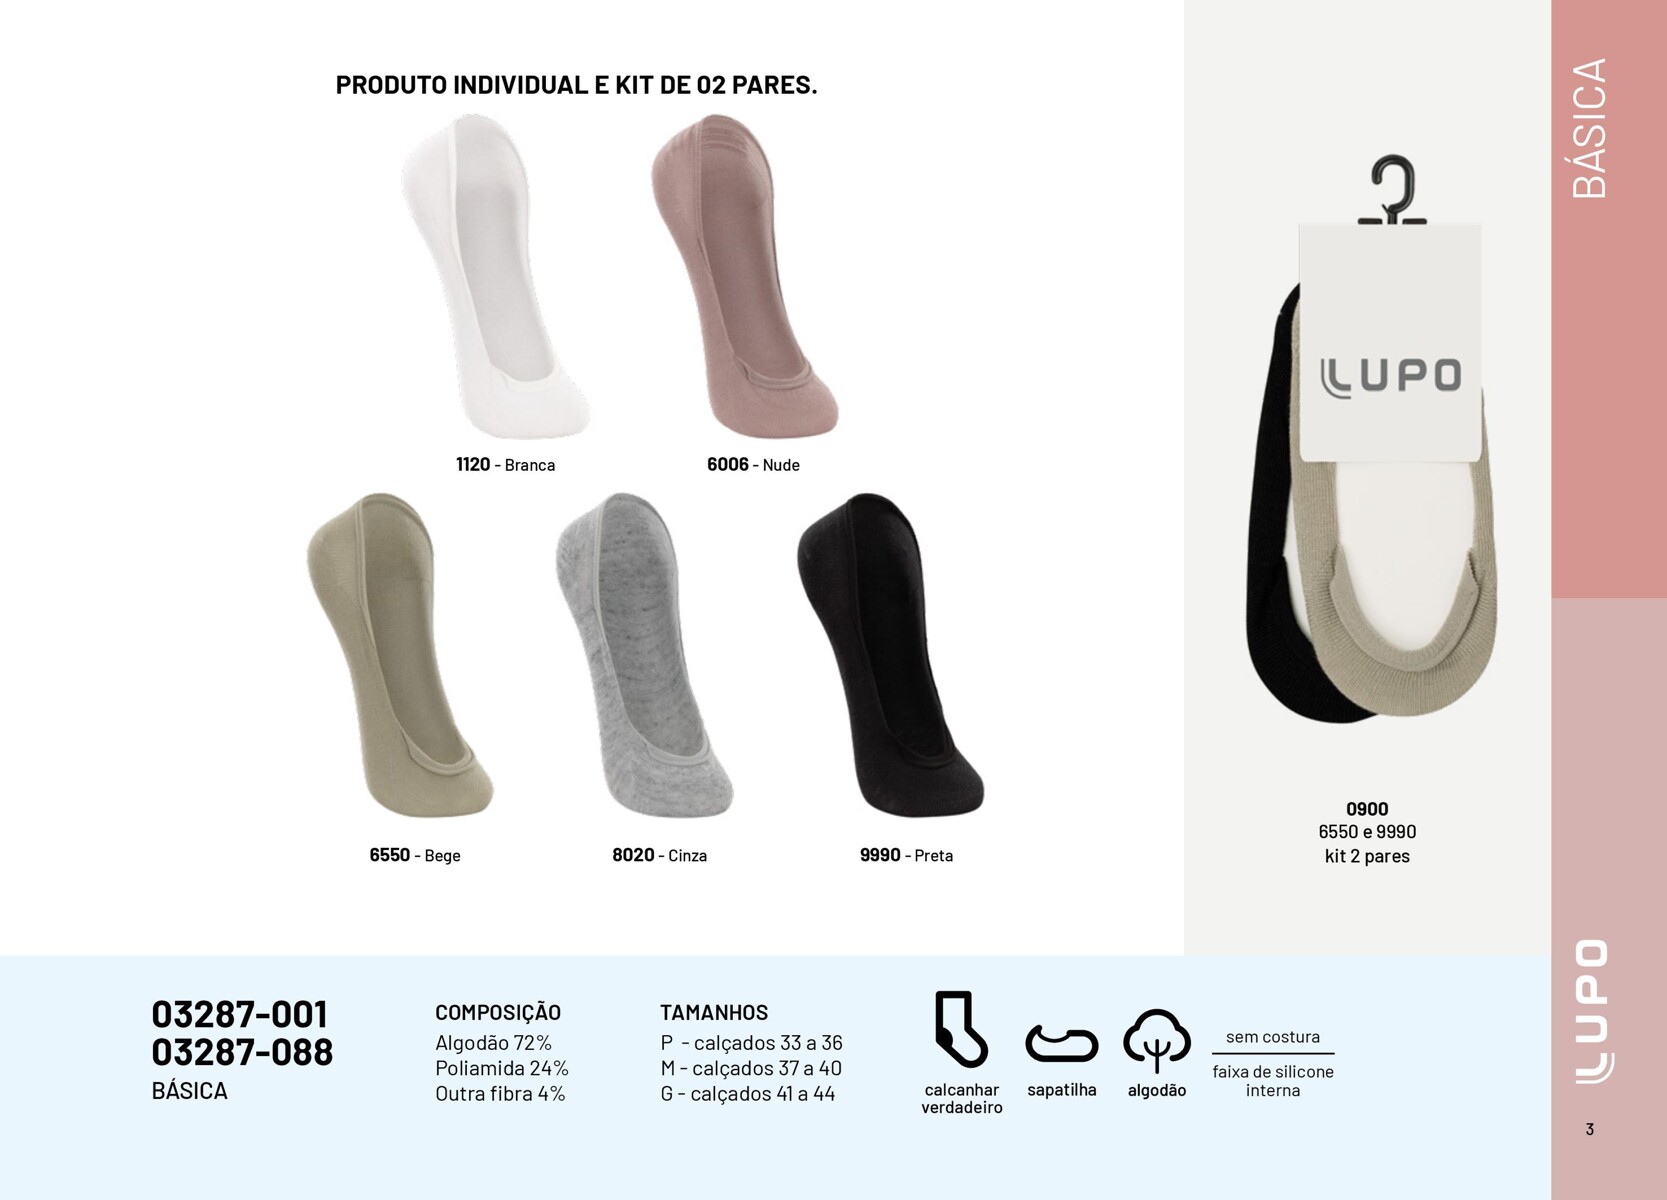 Kit de 02 pares de meias Lupo - Branca, Nude, Bege, Cinza e Preta